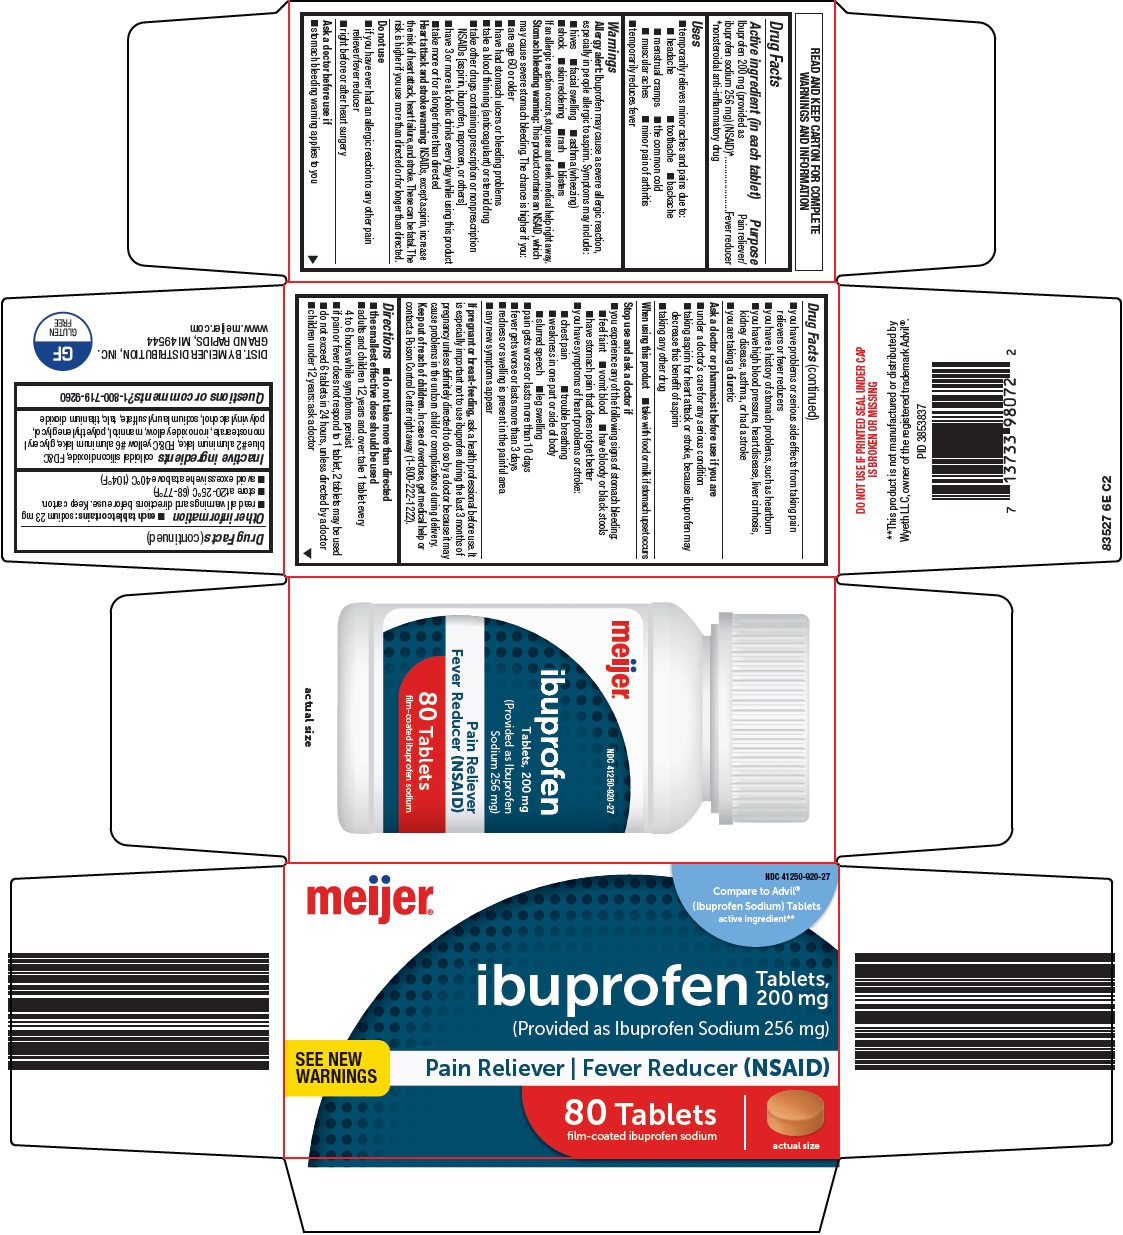 835-6e-ibuprofen.jpg